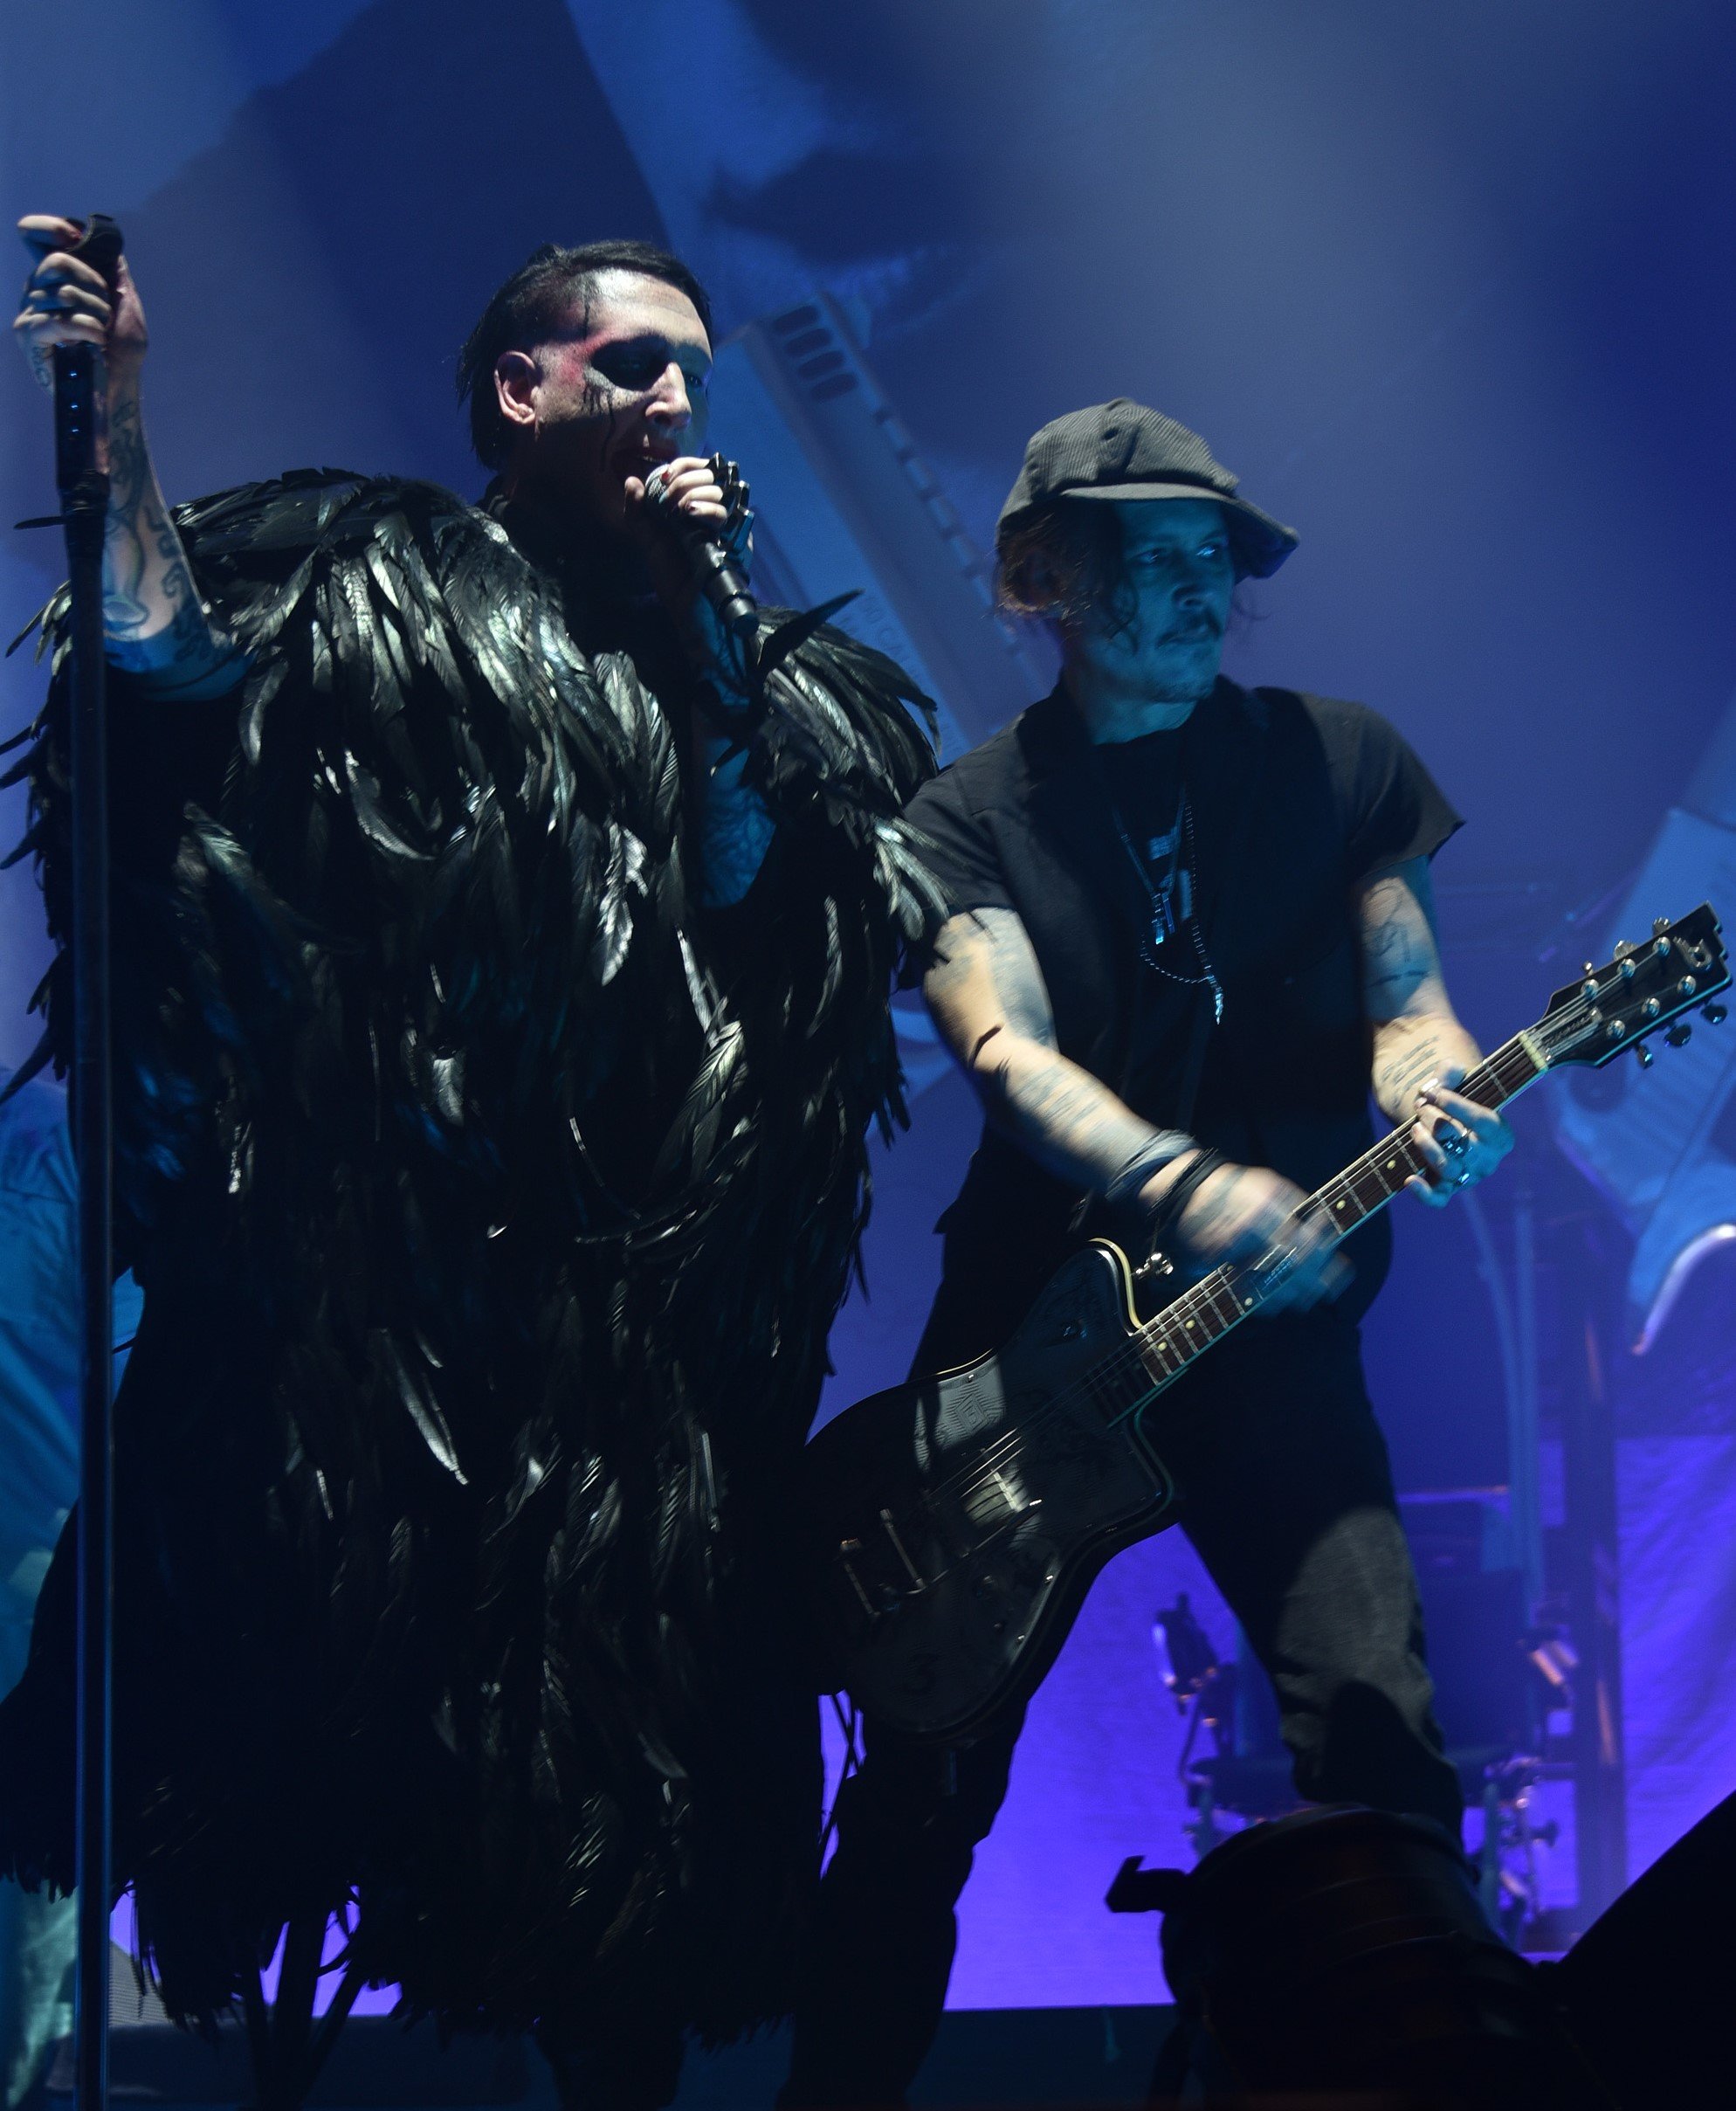  Marilyn Manson and Johnny Depp performing